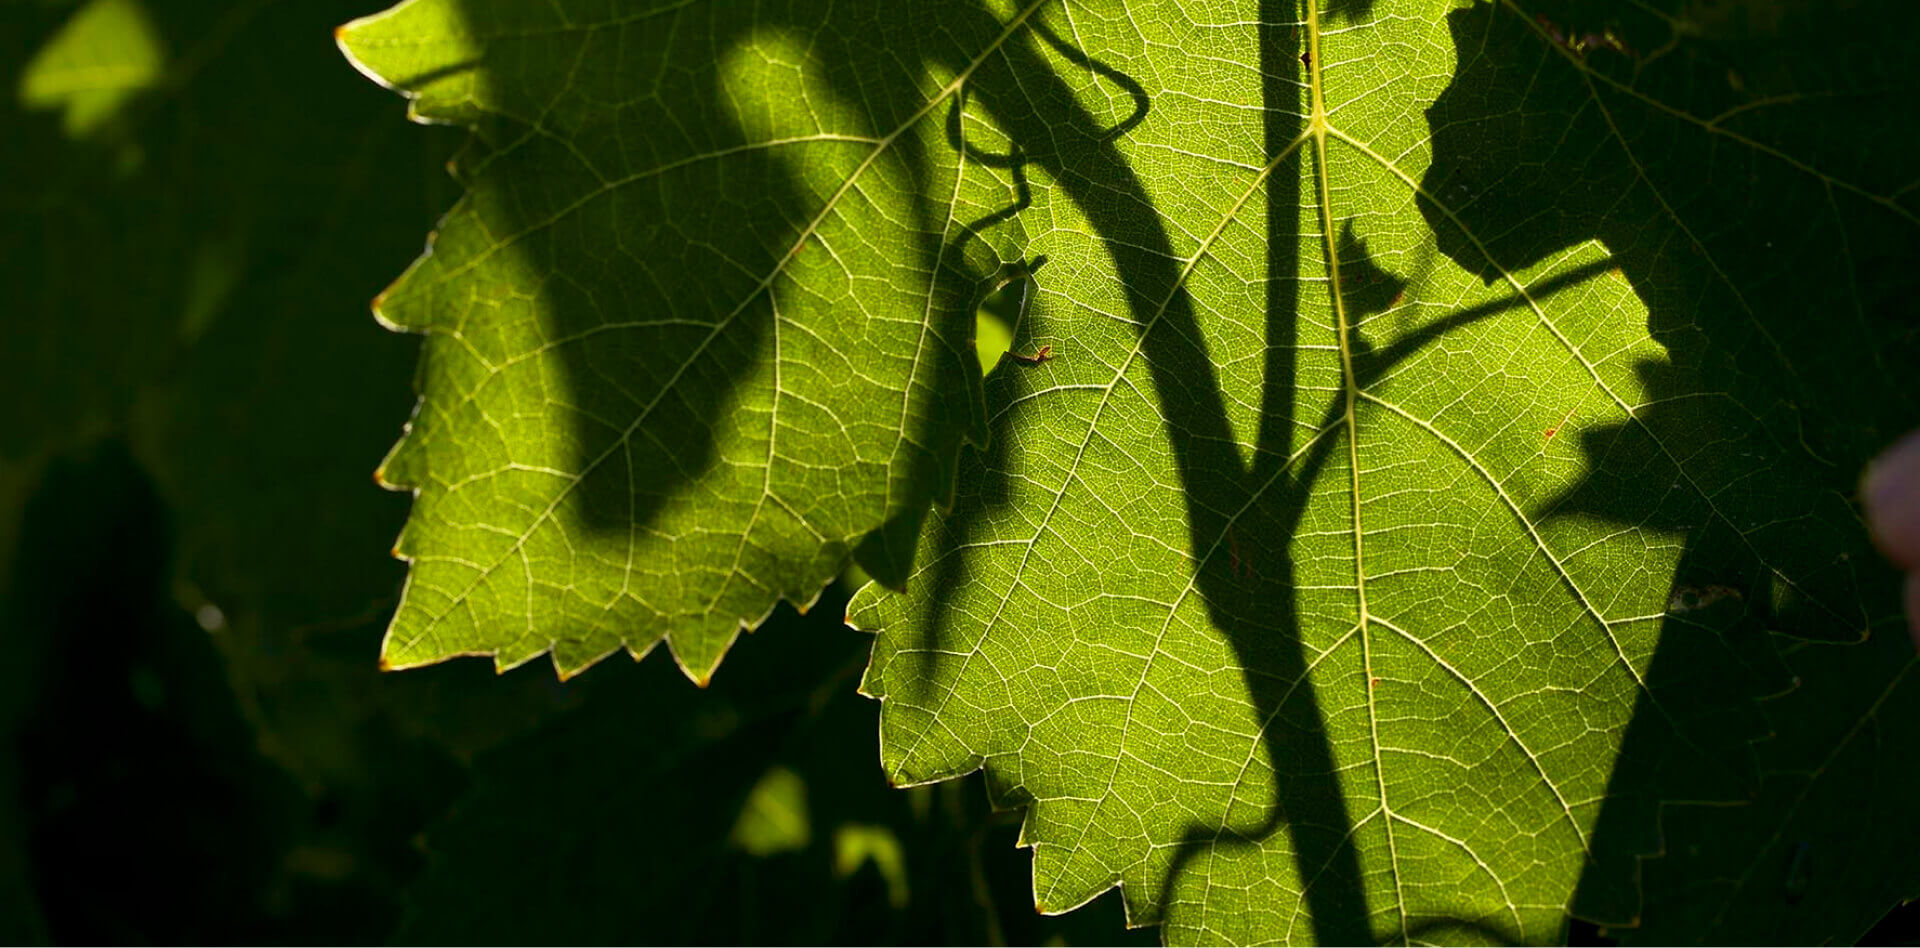 A grape leaf with shadows of stems and grape vine tendrils.